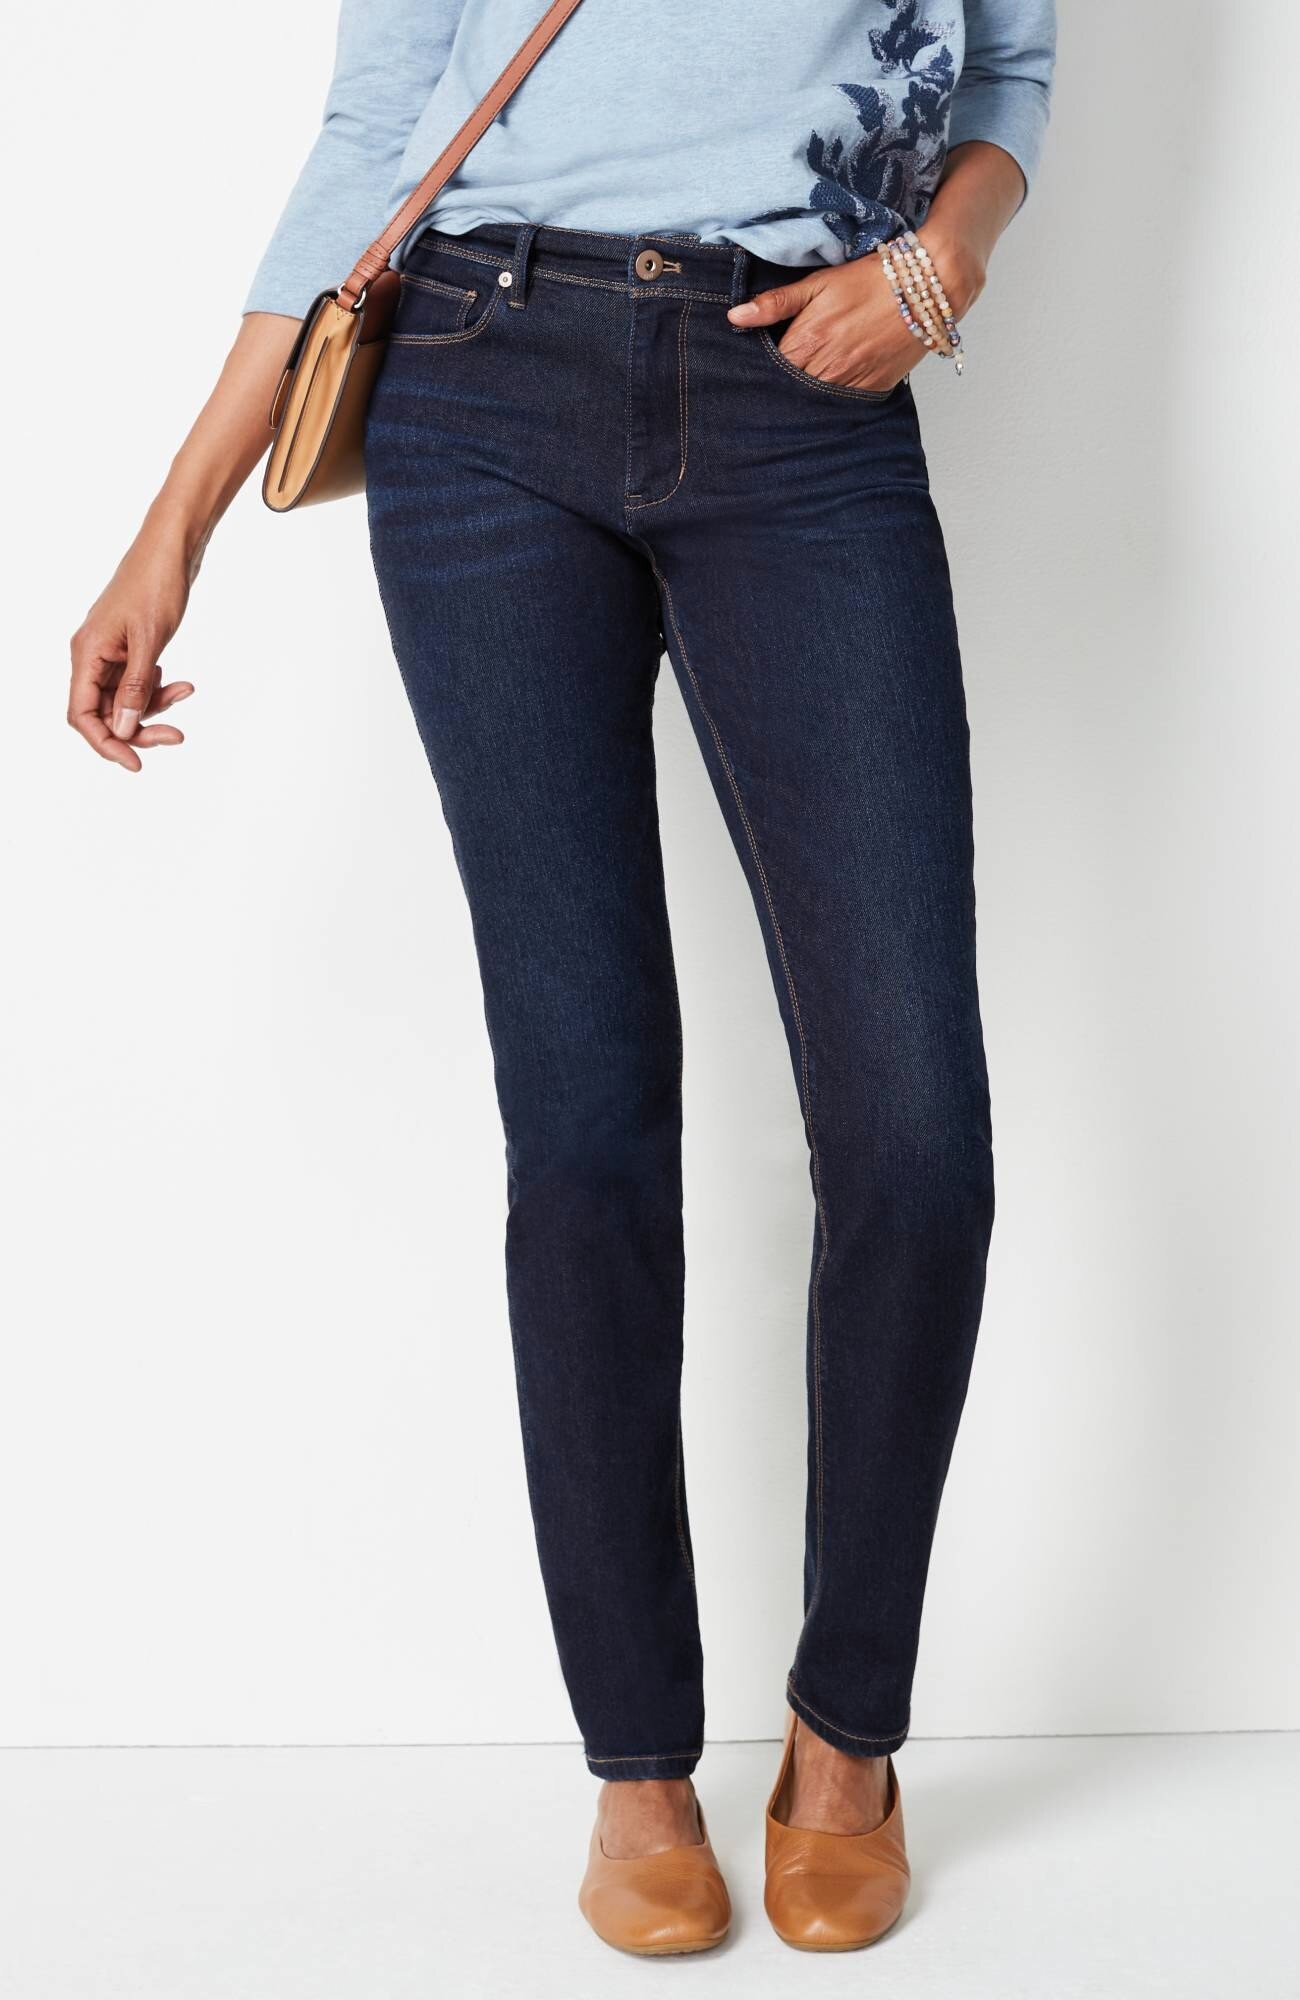 New Look Inspire Navy Blue Denim Skinny Jeans Plus Size 20-28 